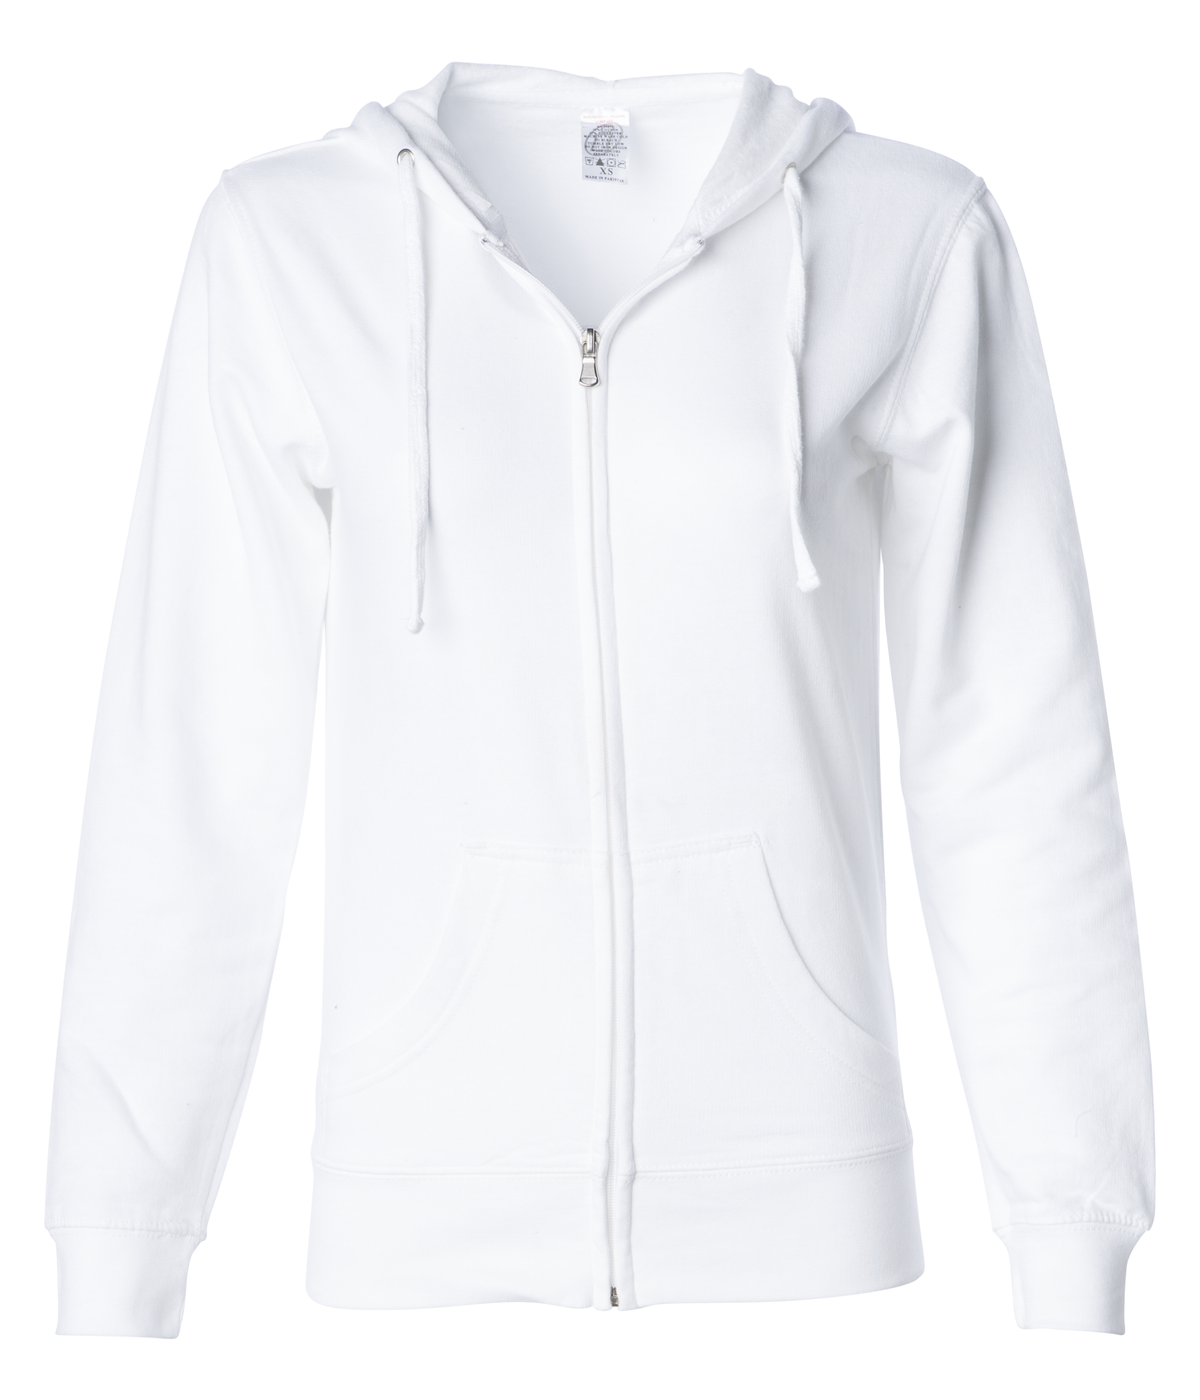 SS650Z - Lightweight Zip Hooded Sweatshirt